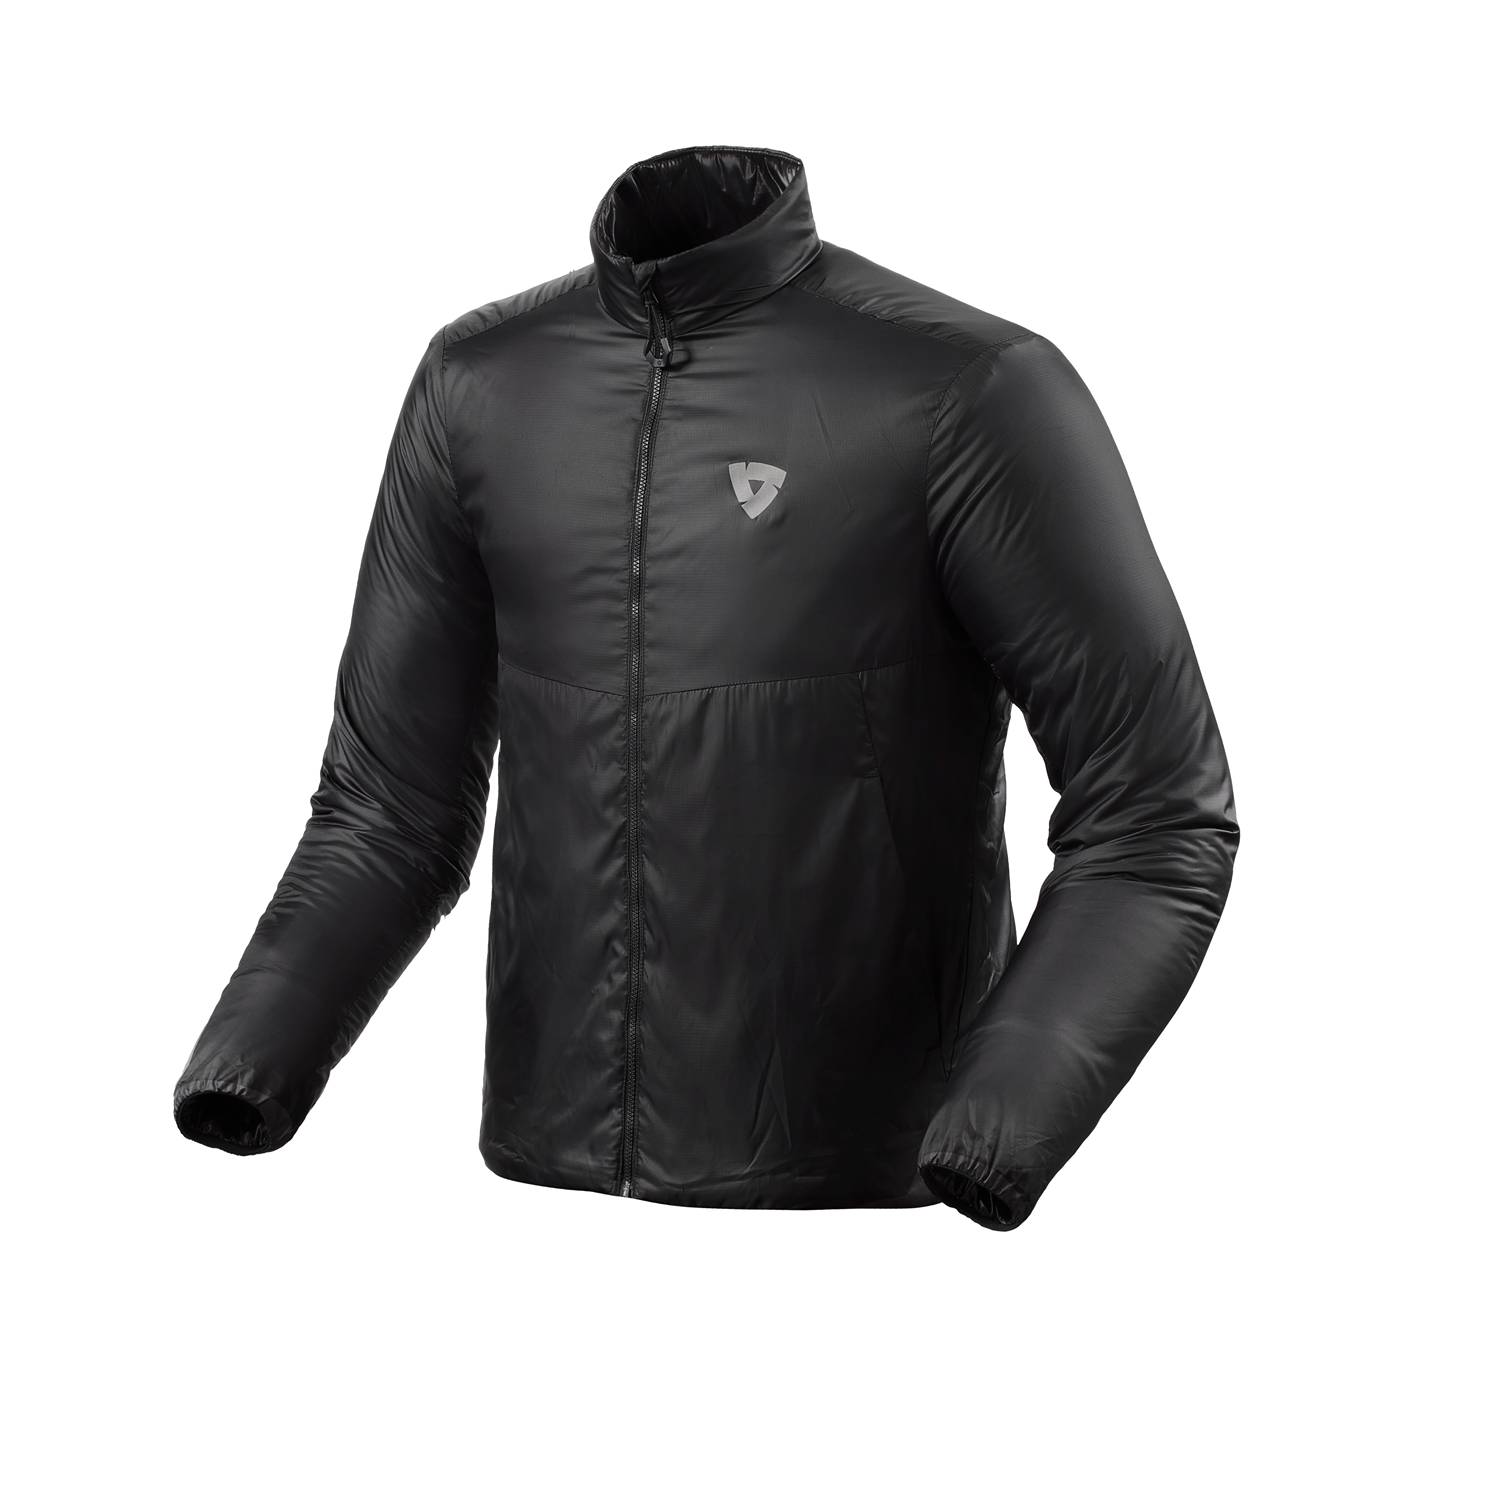 Image of REV'IT! Core 2 Mid Layer Jacket Black Talla S